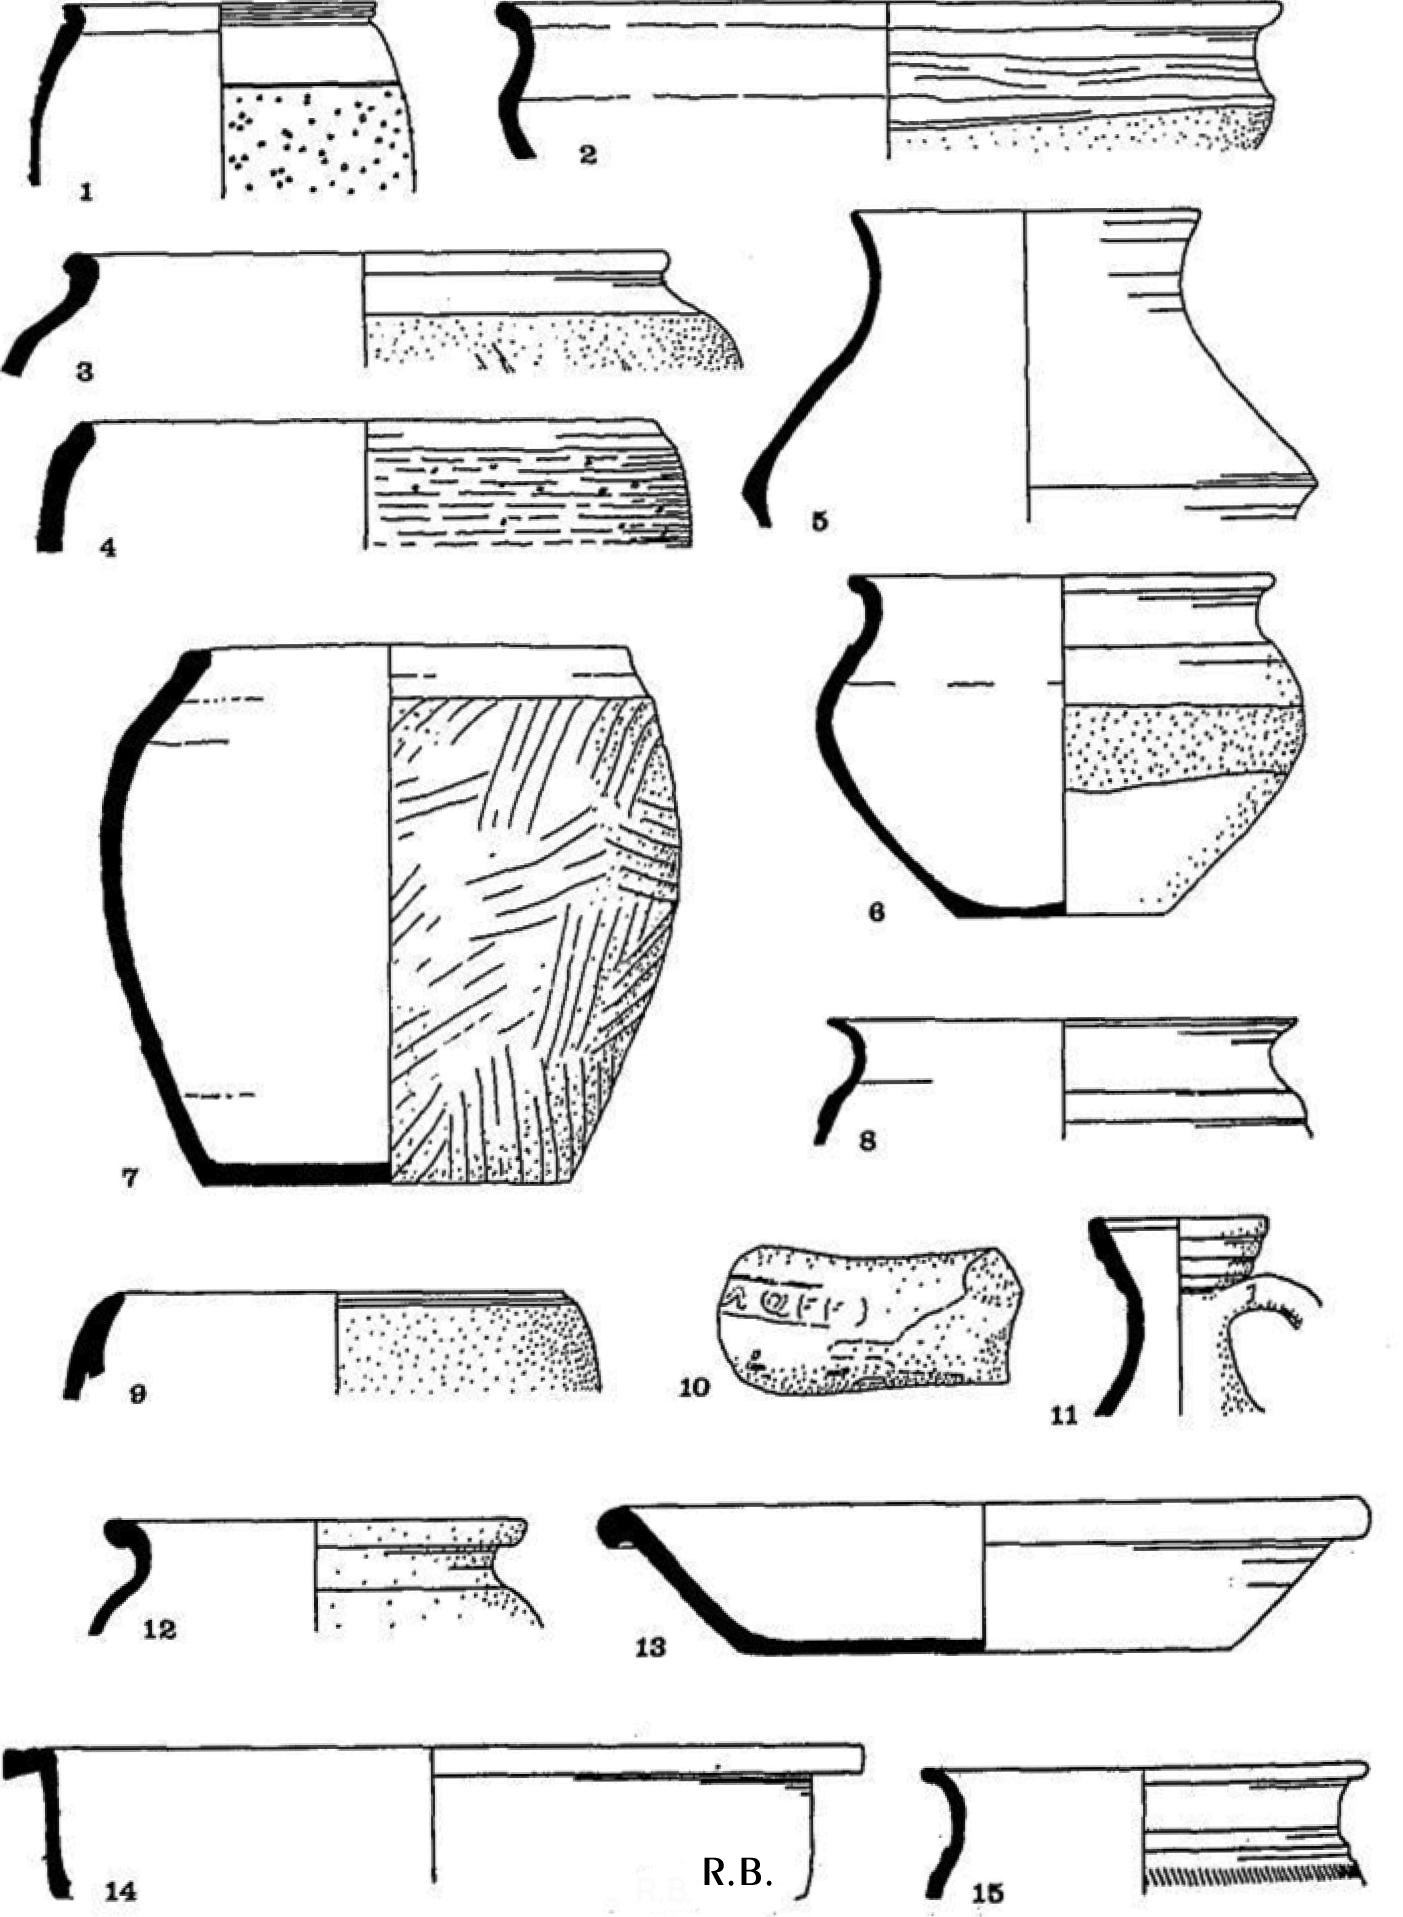 Romano-British Potery fragments at Radfield excavation